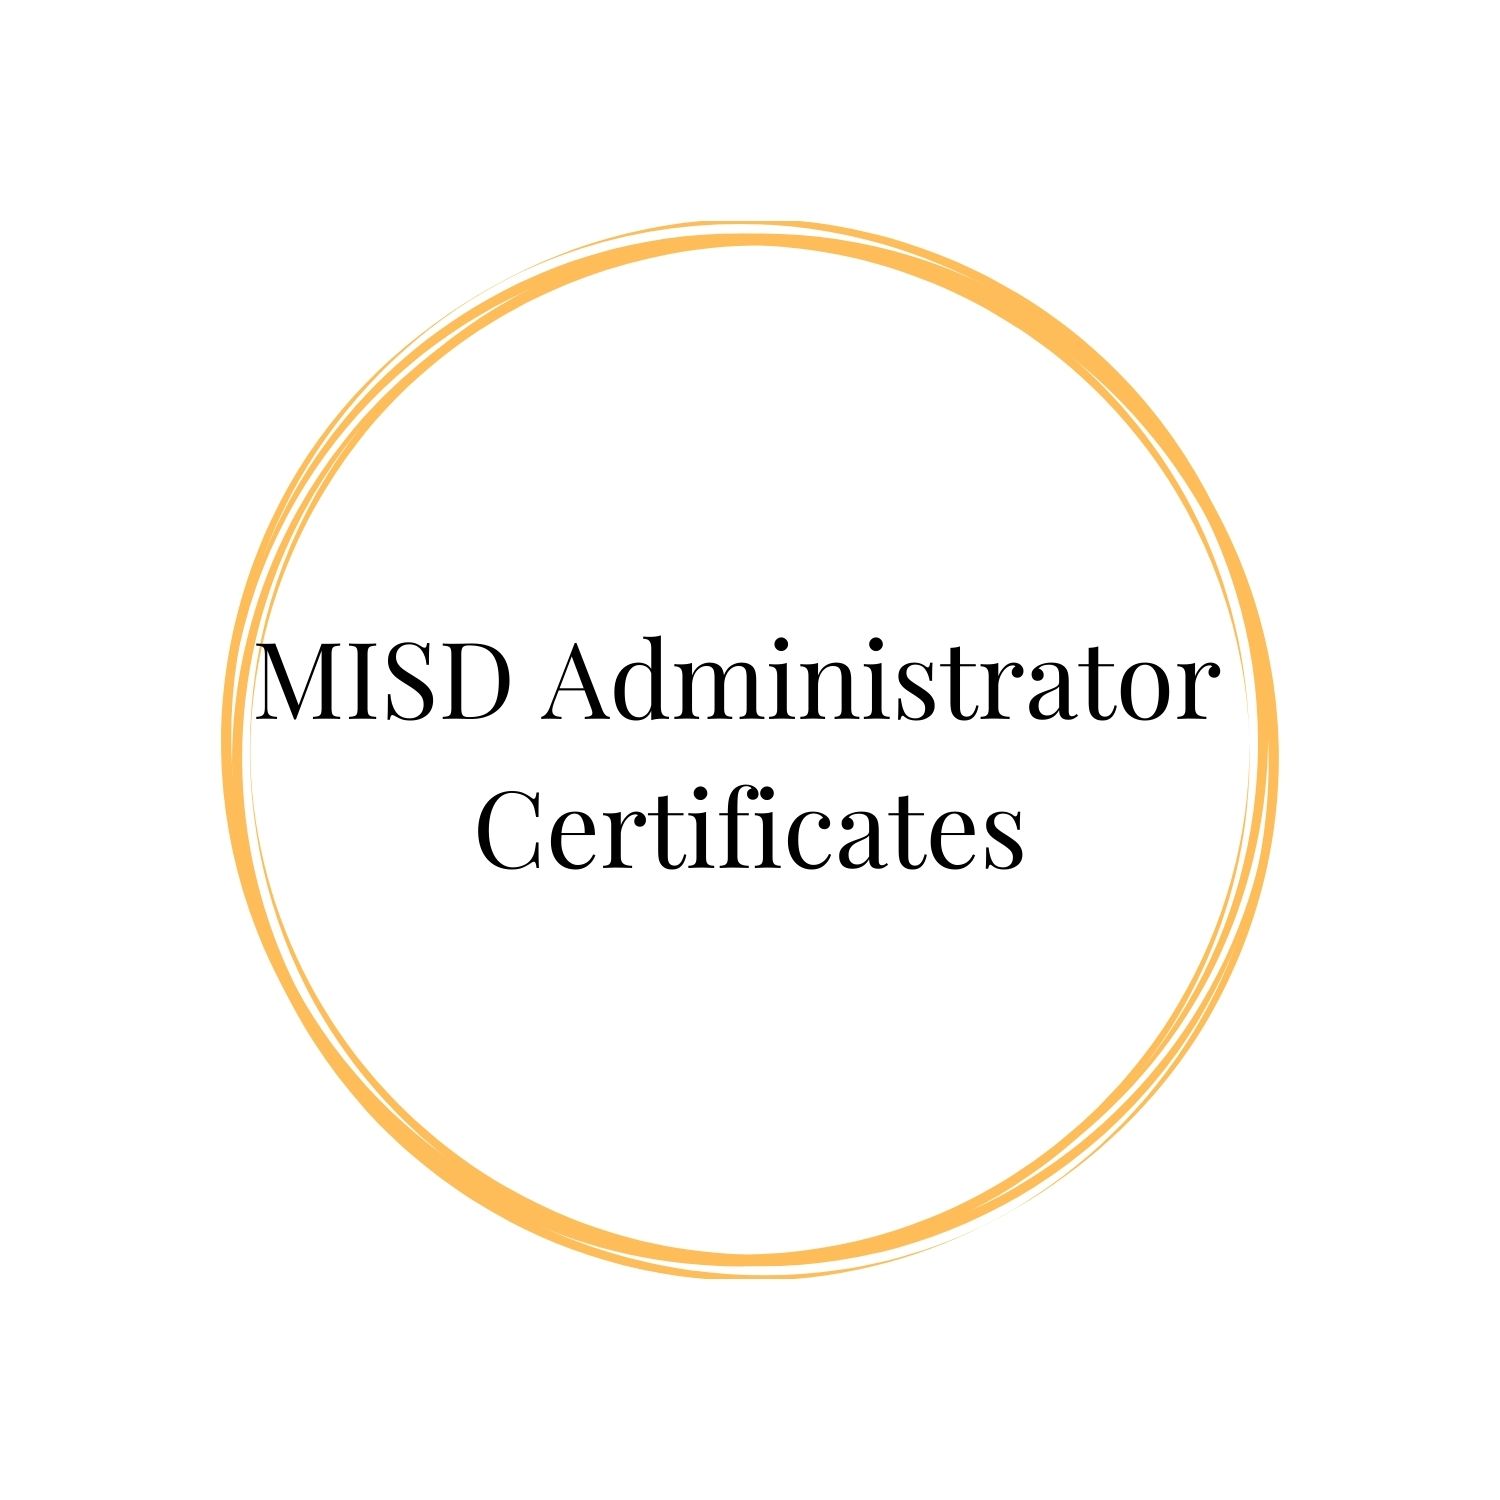 MISD Administrator Certificates